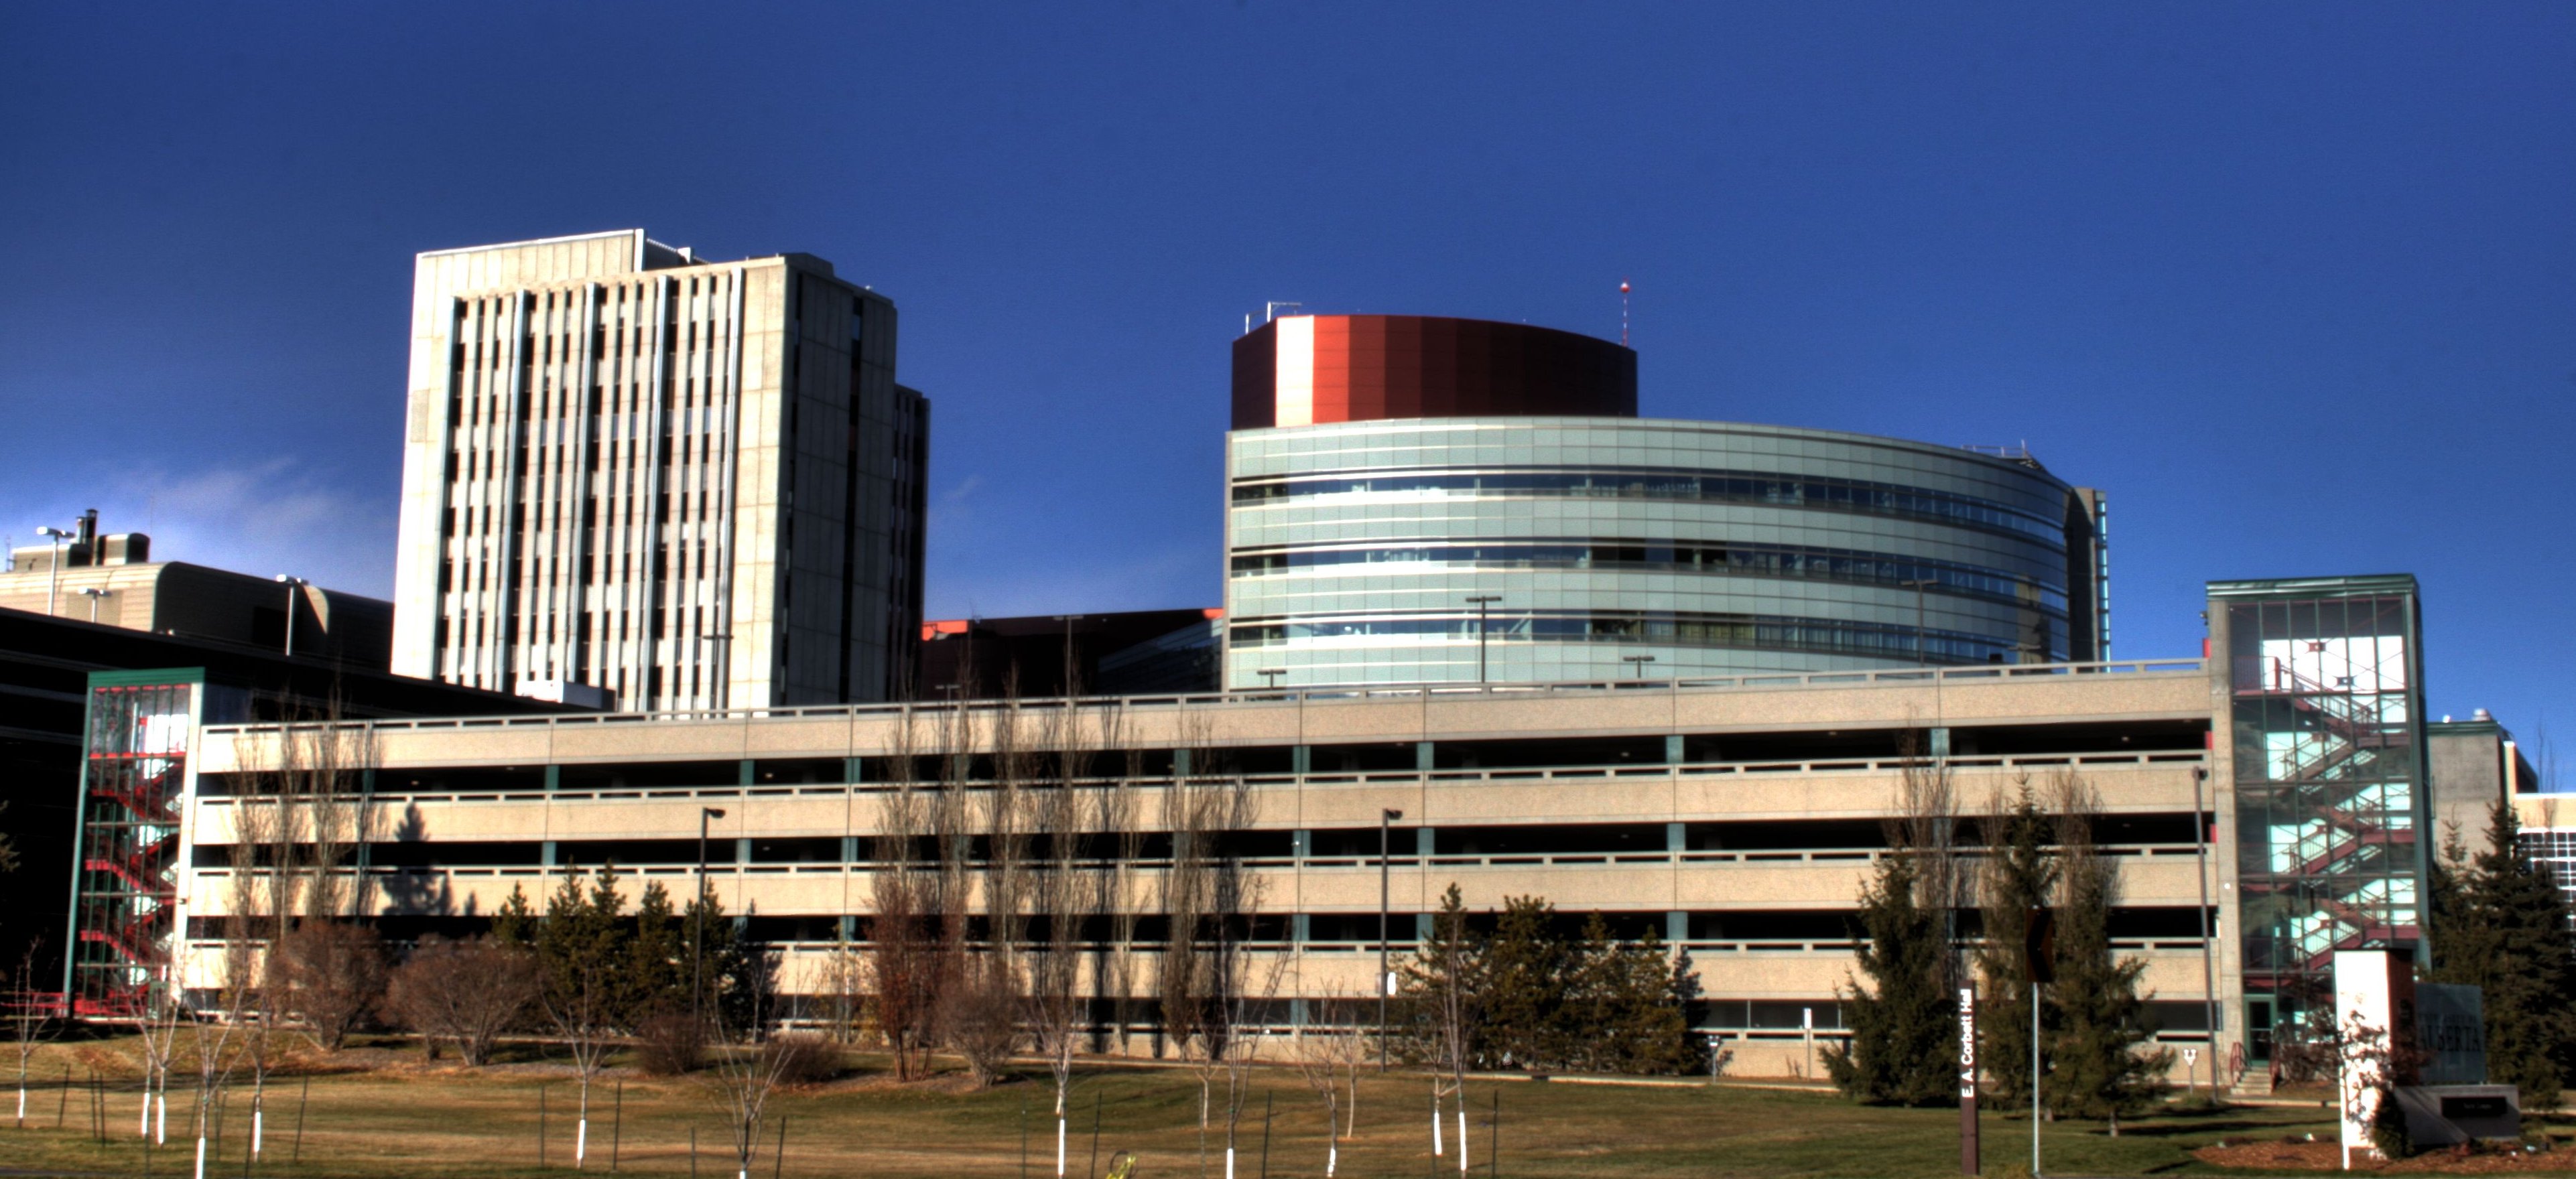 University_Hospital_Complex_University_Of_Alberta_Edmonton_Alberta_Canada_02A.jpg